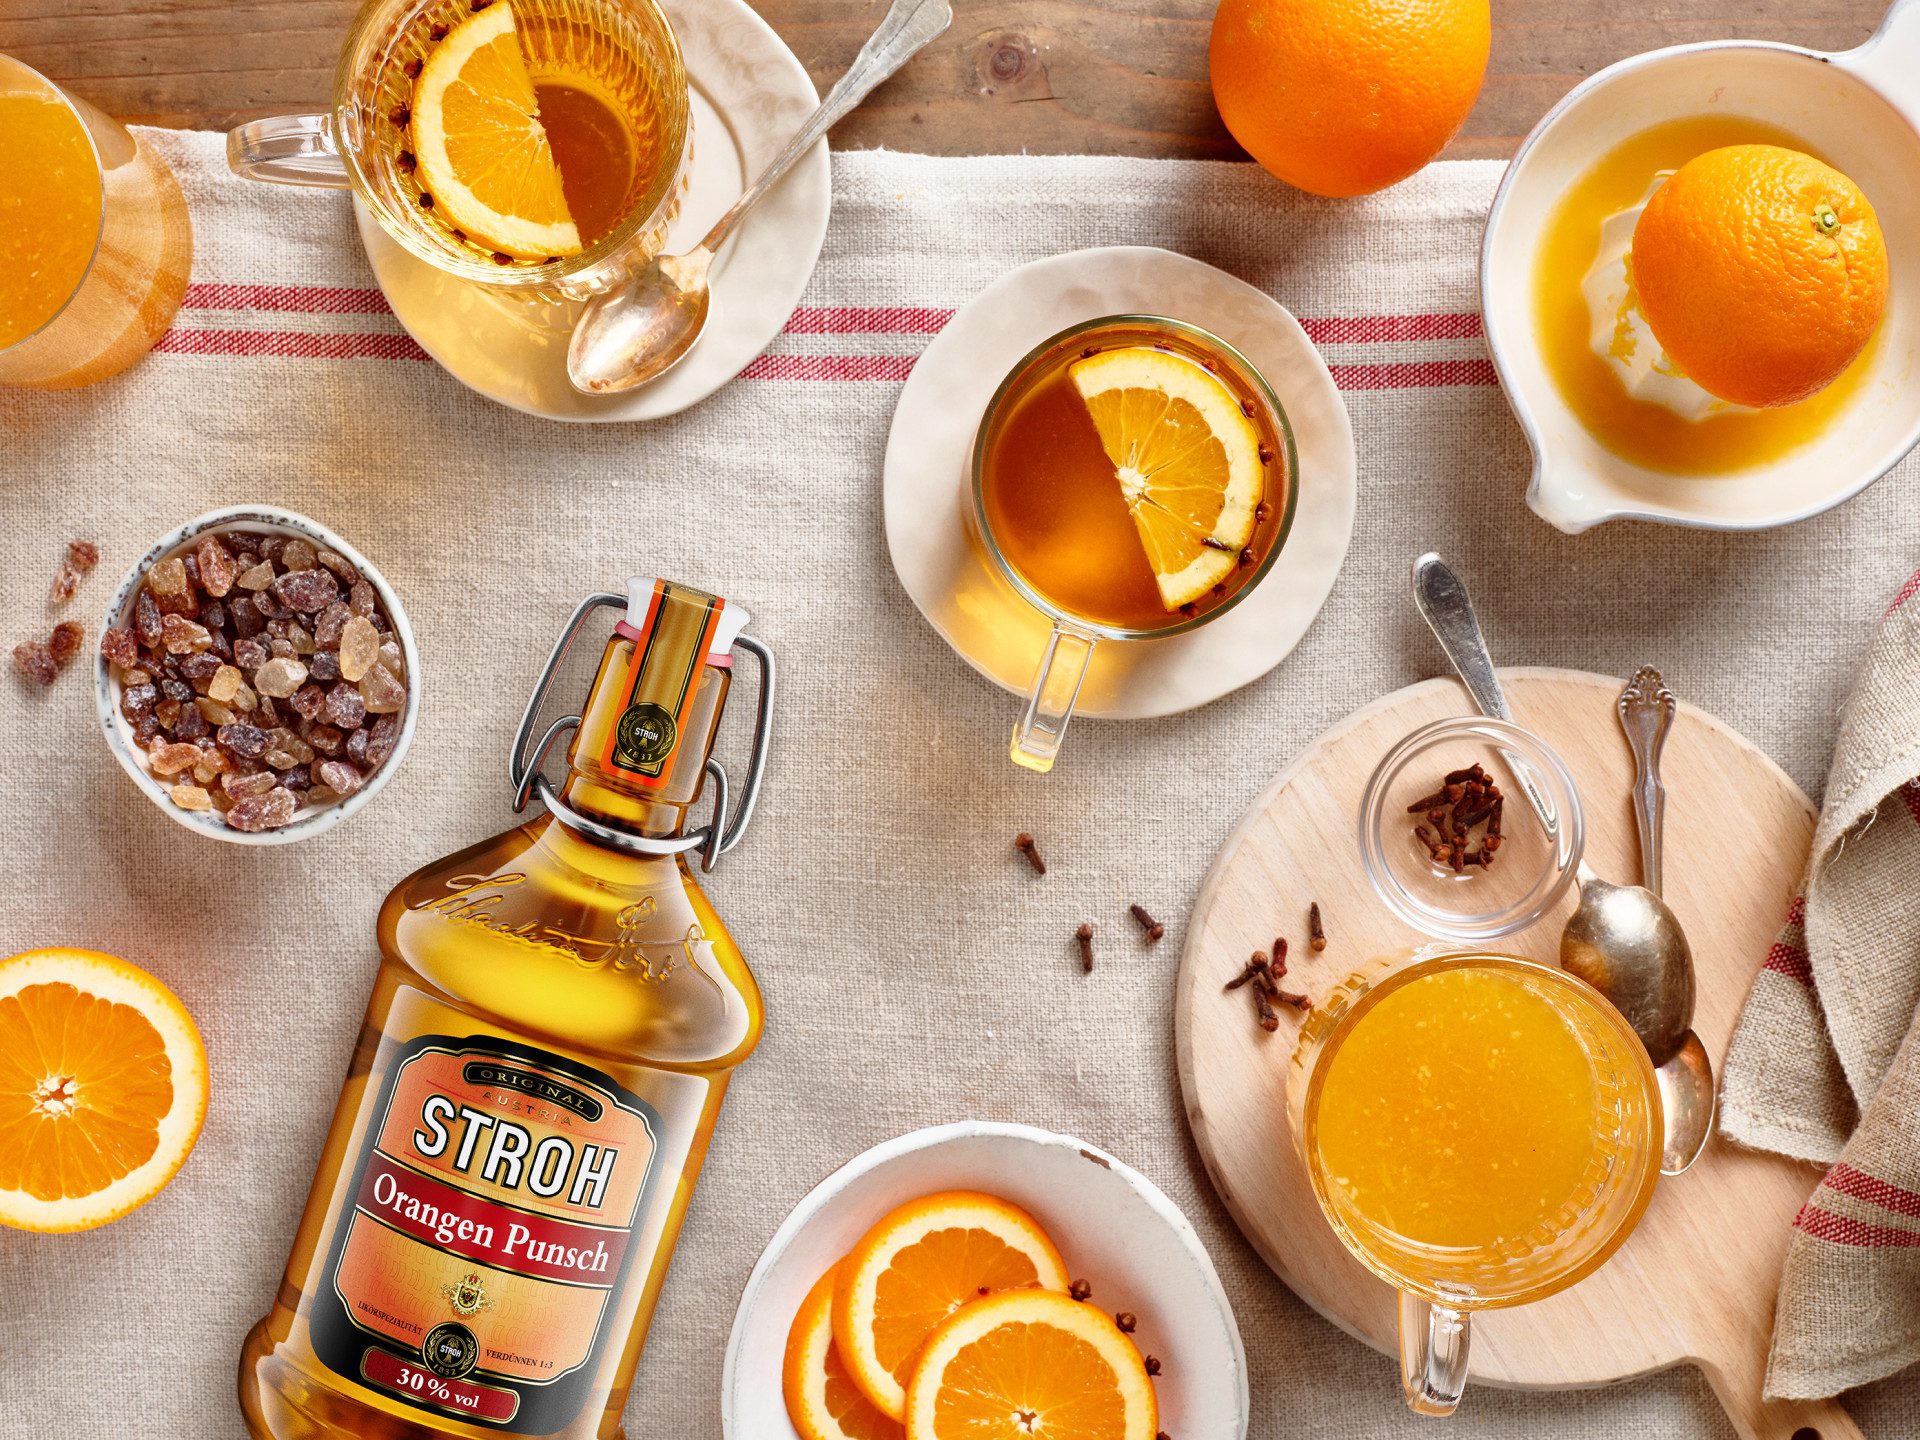 STROH Recipes: STROH Orangen Punsch – Add a little STROH!